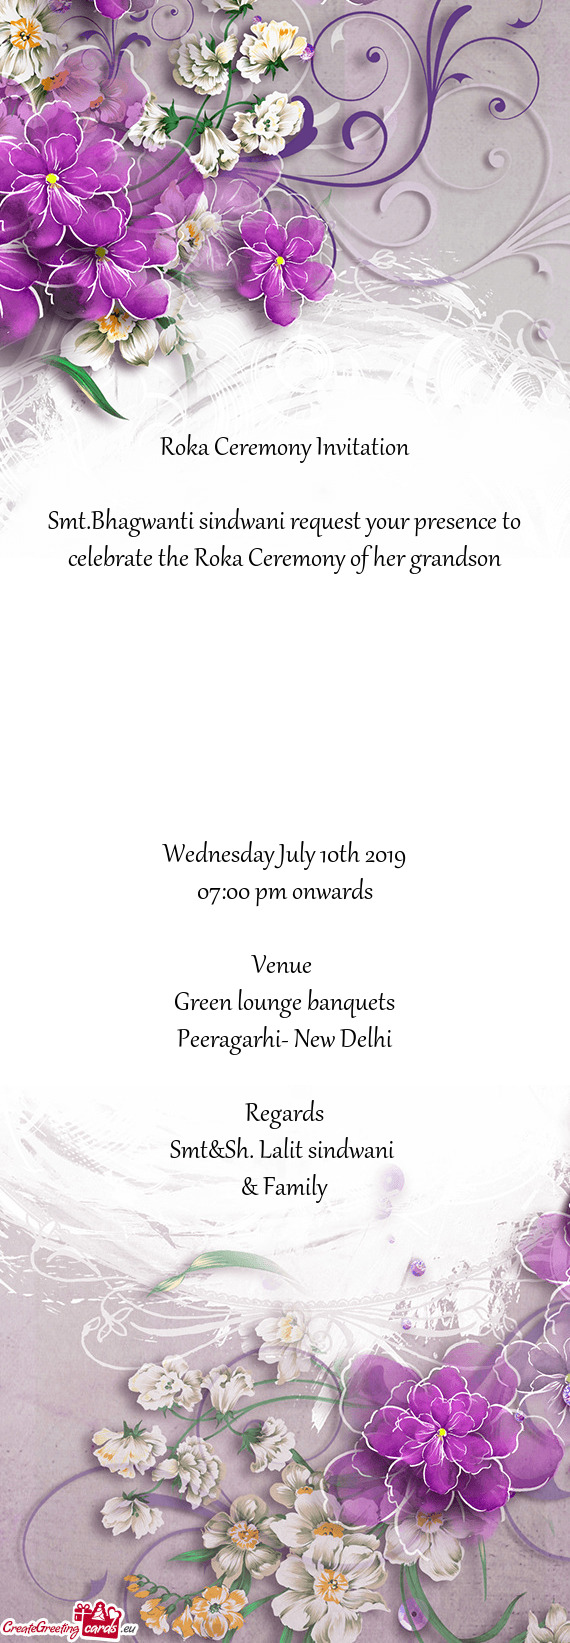 Smt.Bhagwanti sindwani request your presence to celebrate the Roka Ceremony of her grandson